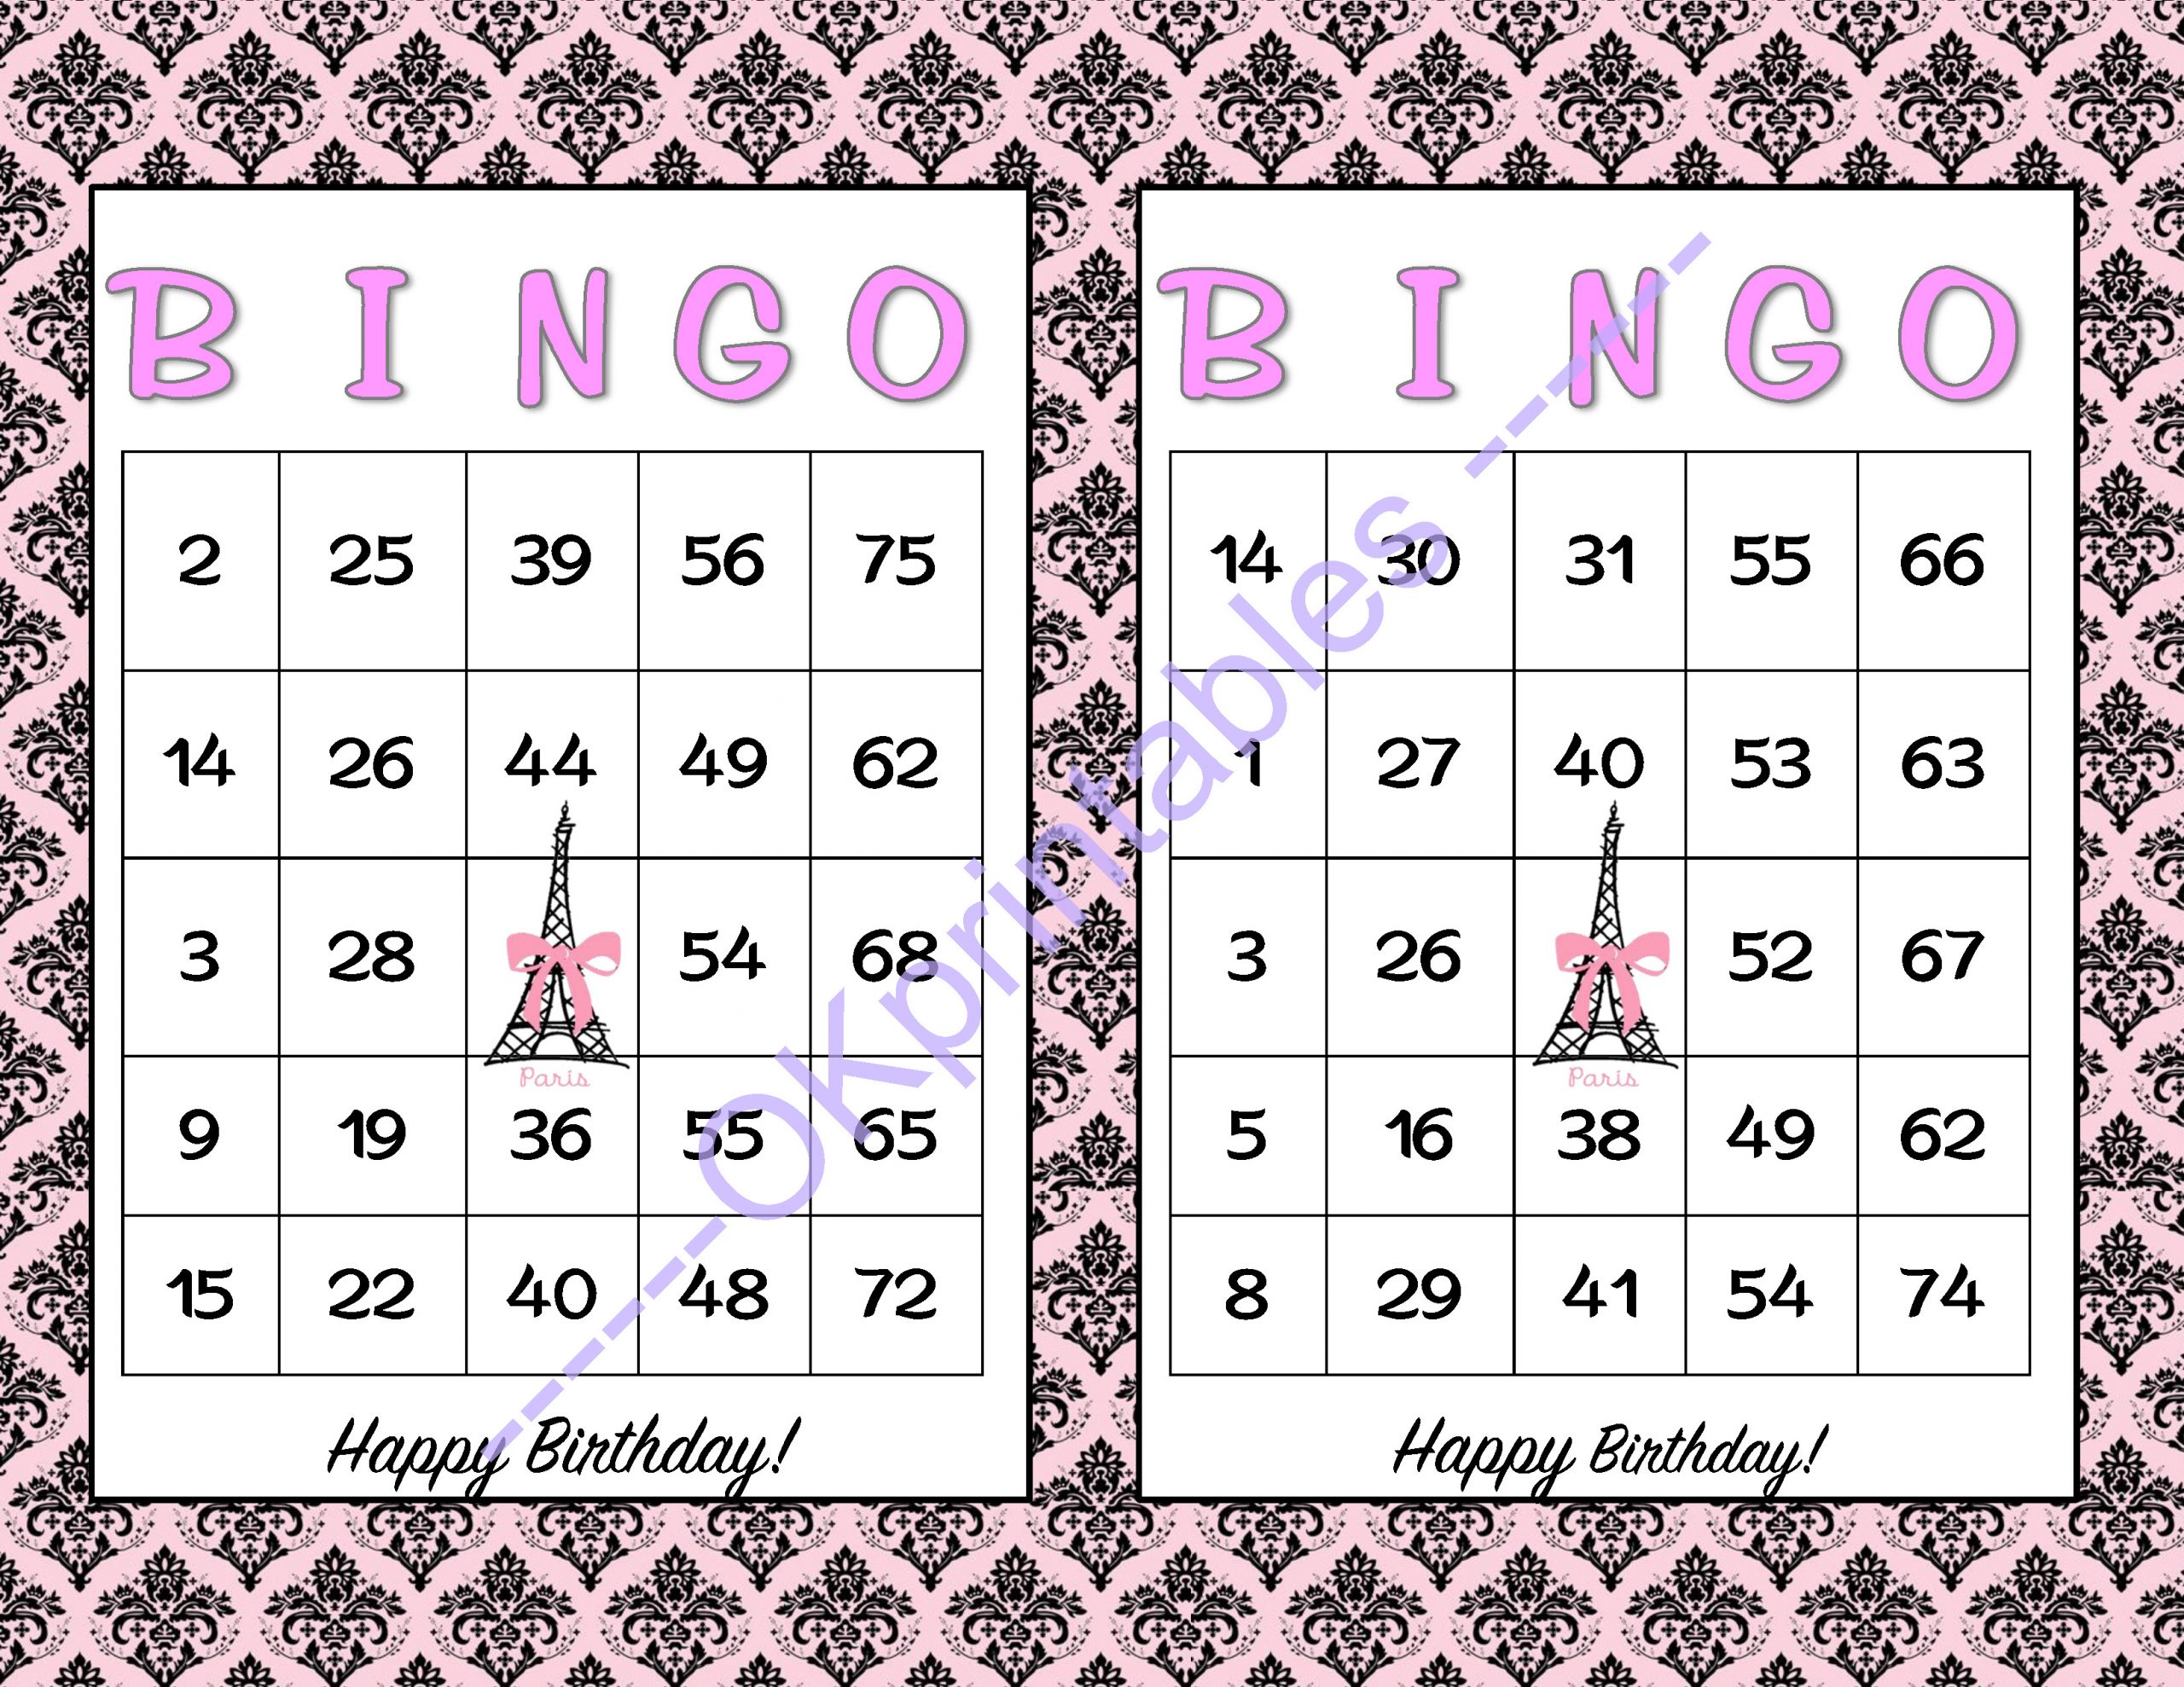 30 Happy Birthday Bingo Cards Printable By Okprintables 